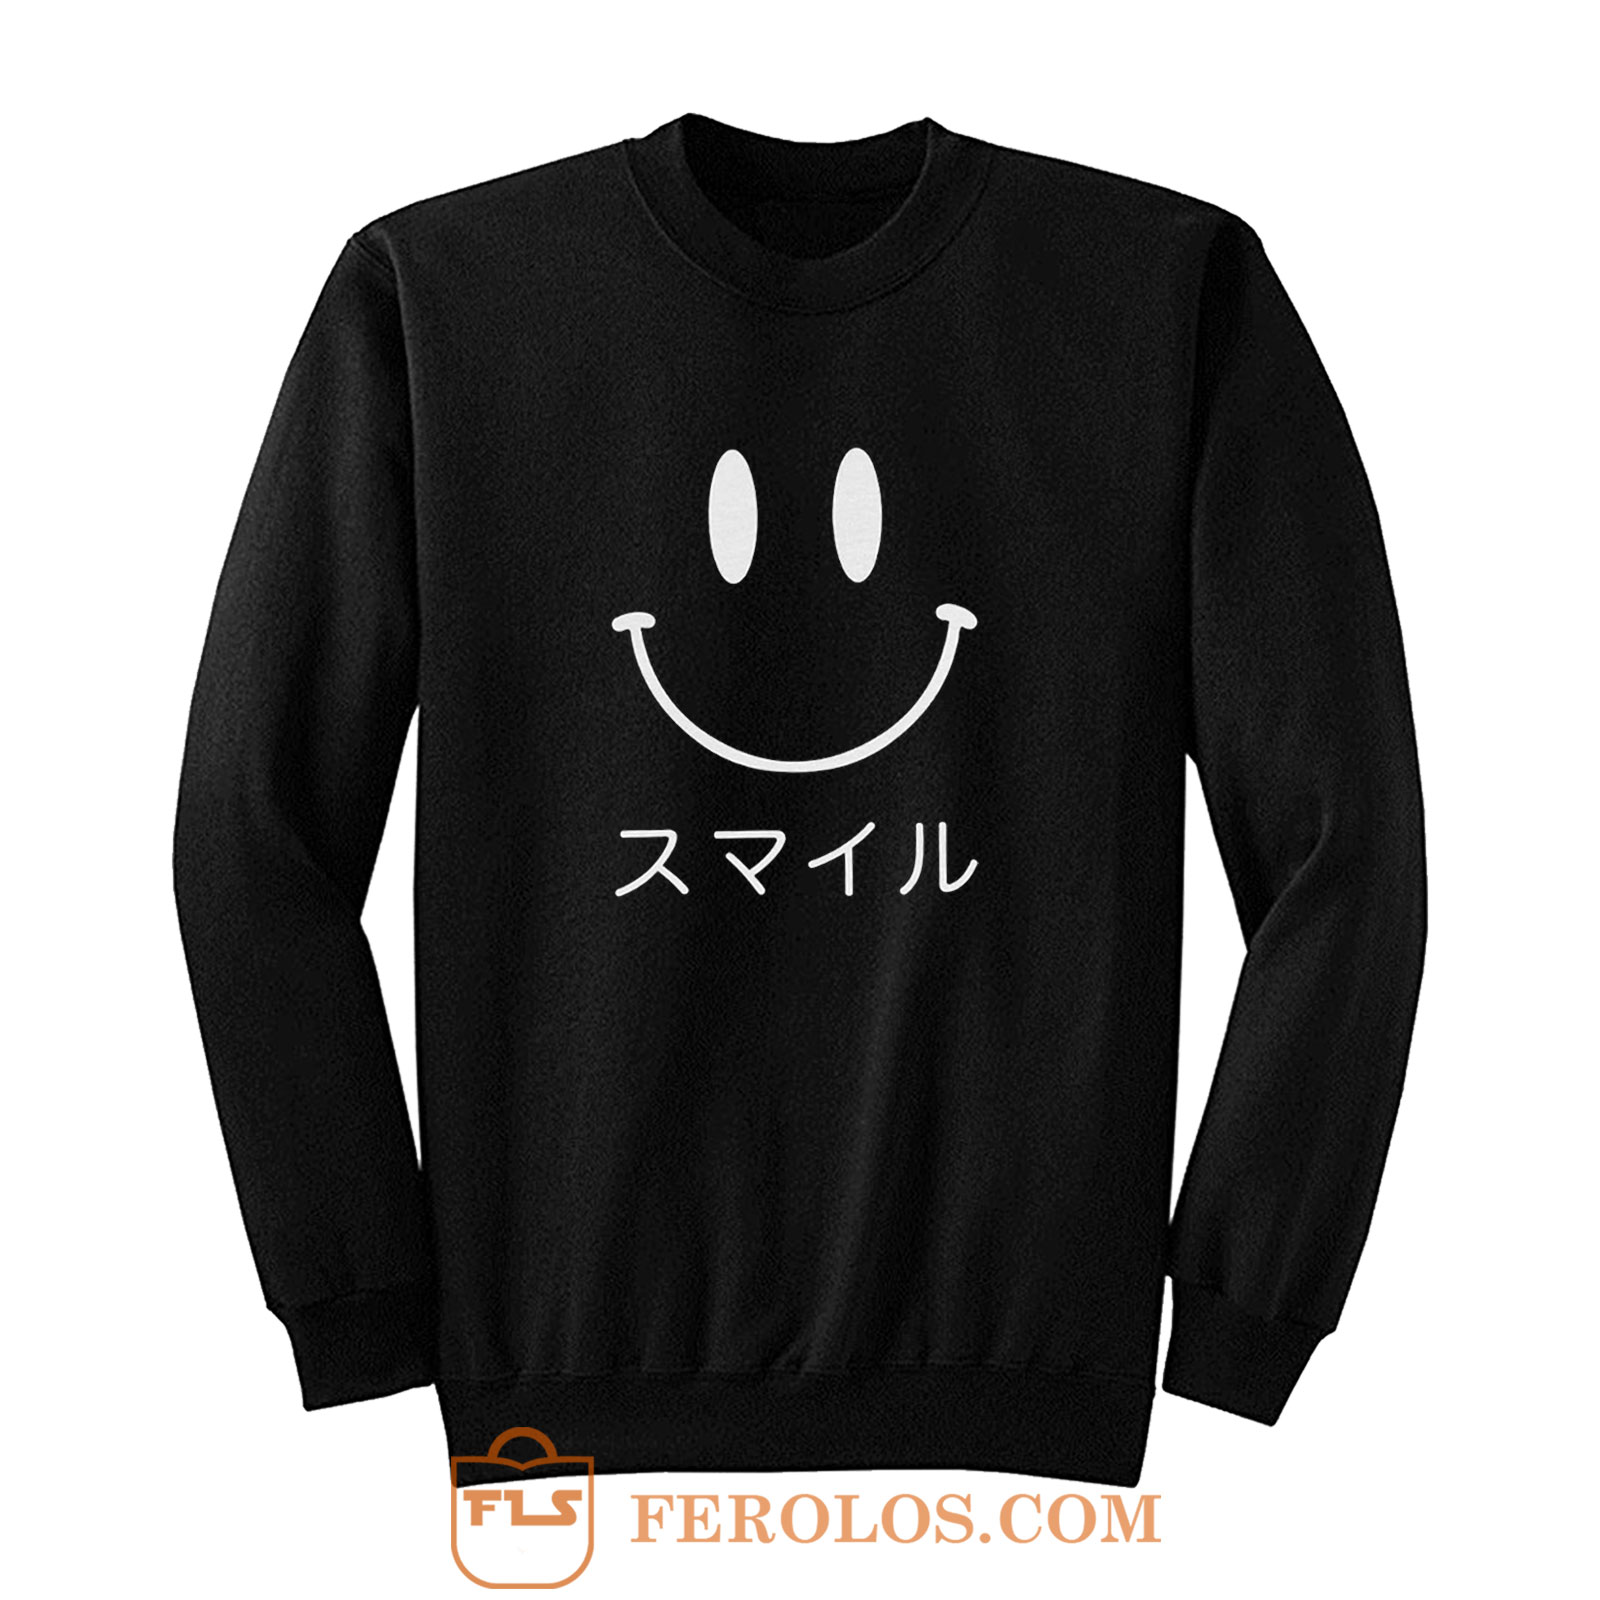 Japanese Smiley Smiley Face Minimal Sweatshirt 